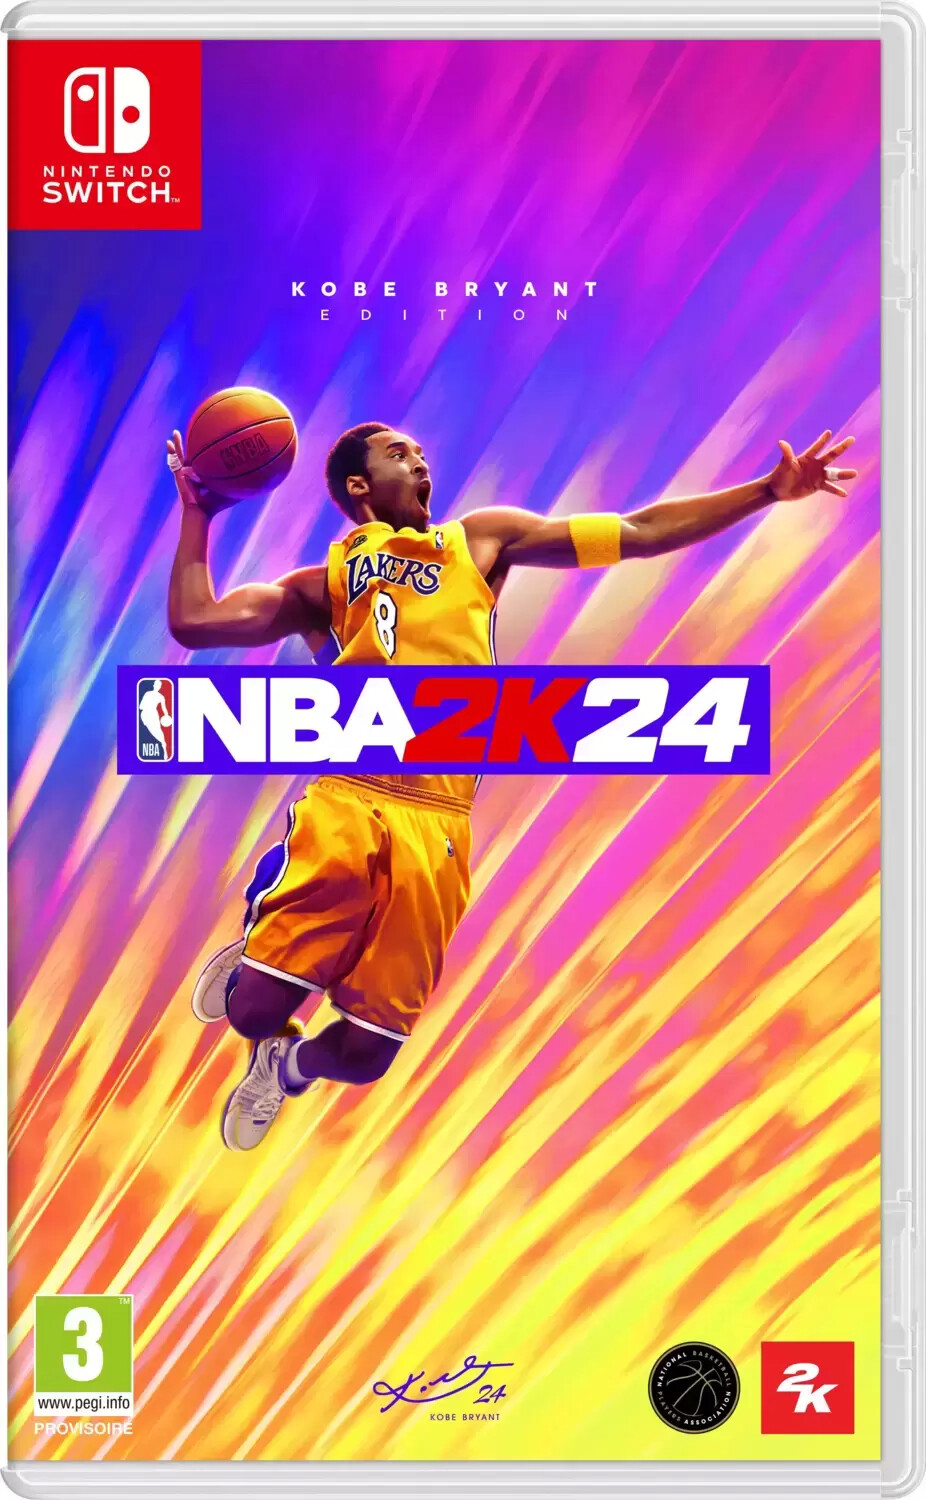 Nintendo Switch Games - NBA 2K24 - Kobe Bryant Edition